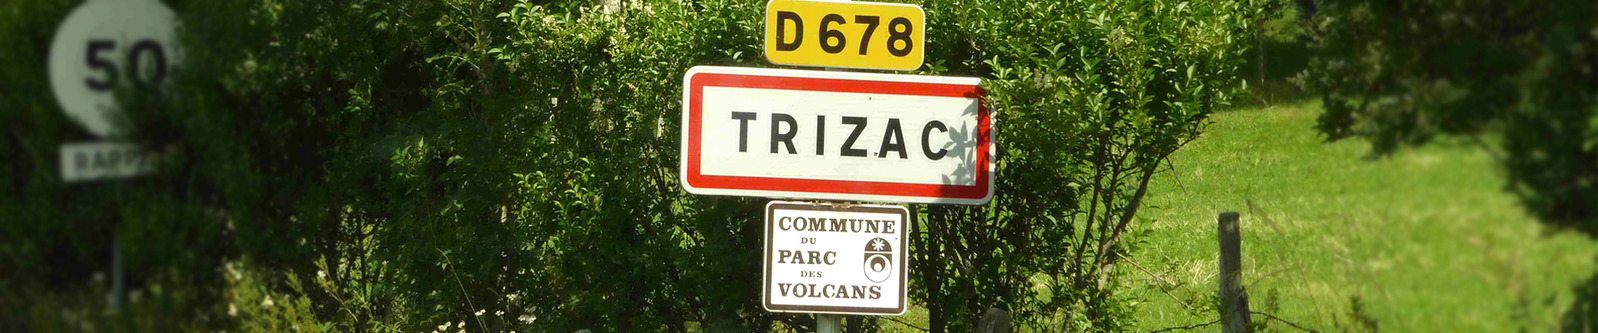 Trizac Cantal Auvergne